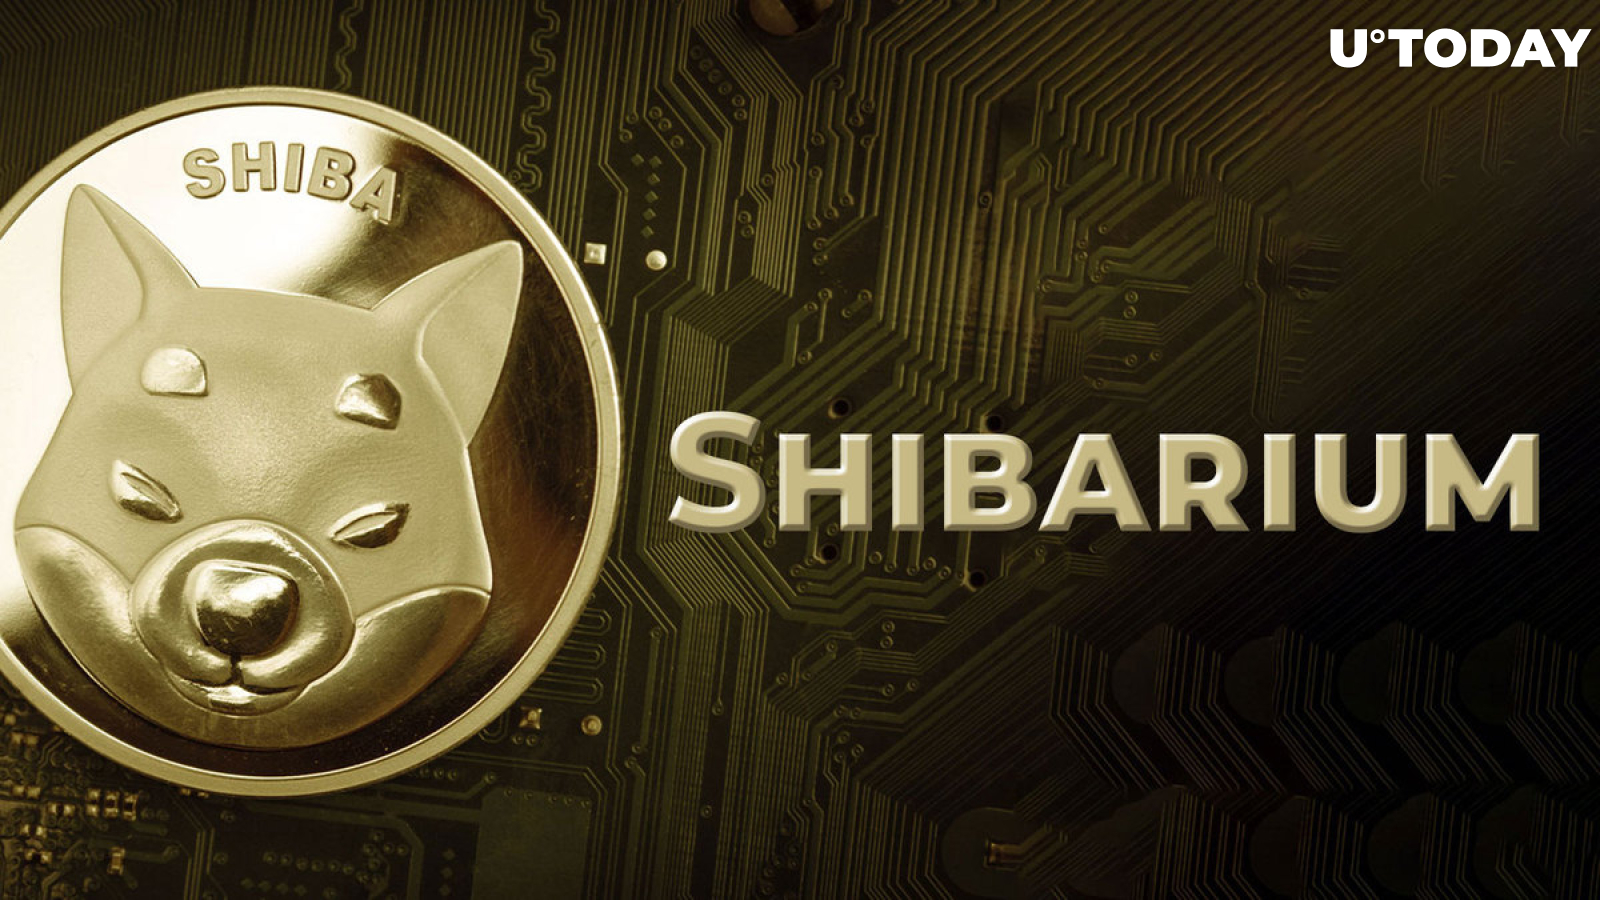 Shibarium Launch Preparation Almost Finished, According to SHIB Lead Dev 